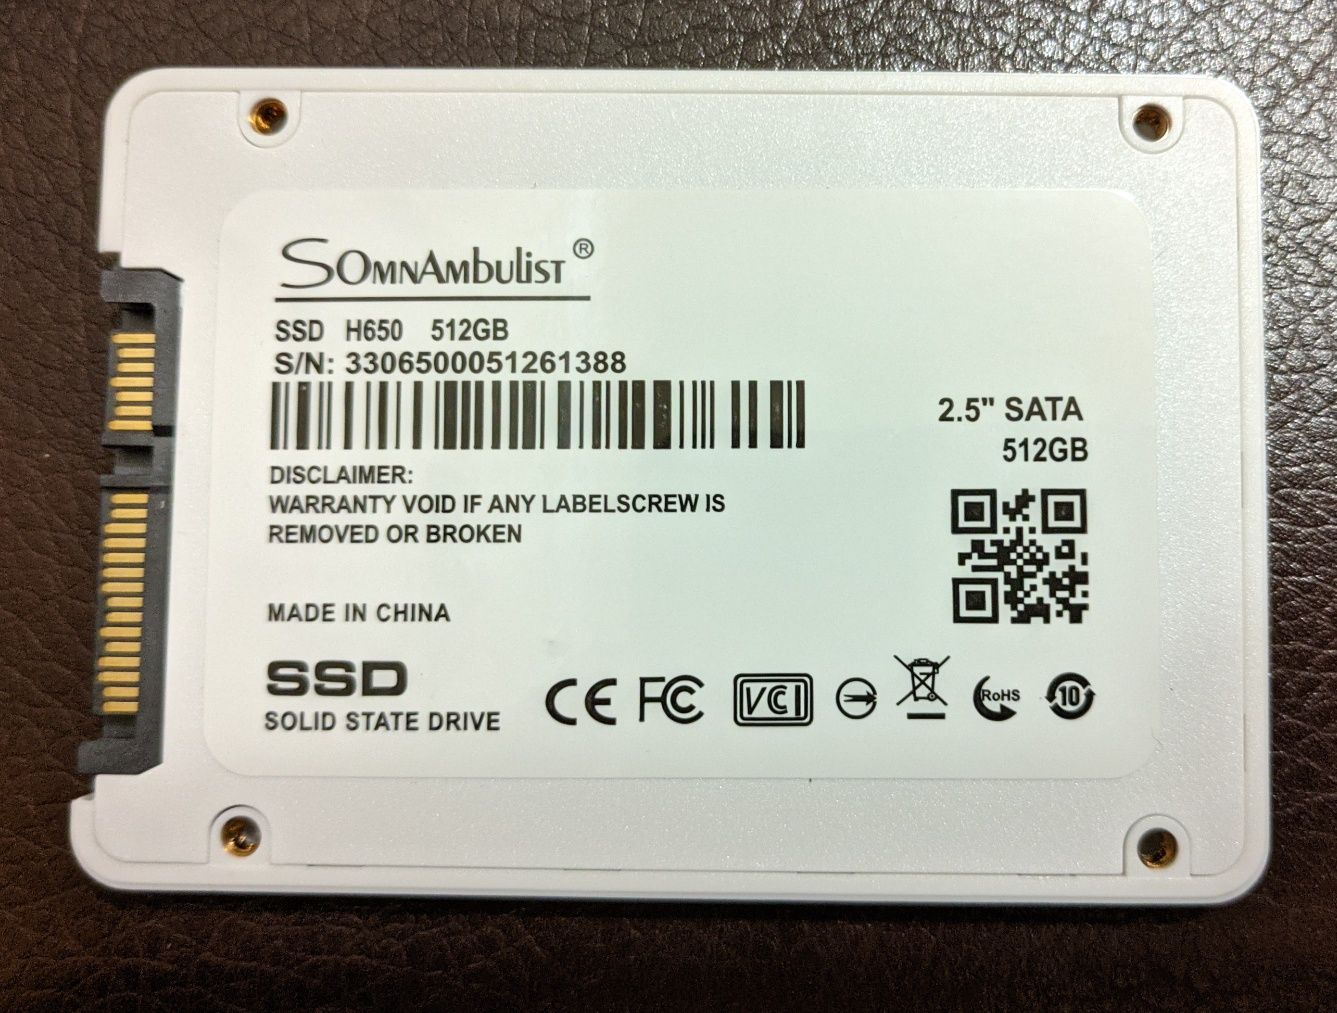 Новый 2.5" SATA III SSD накопитель Somnambulist на 512 Gb